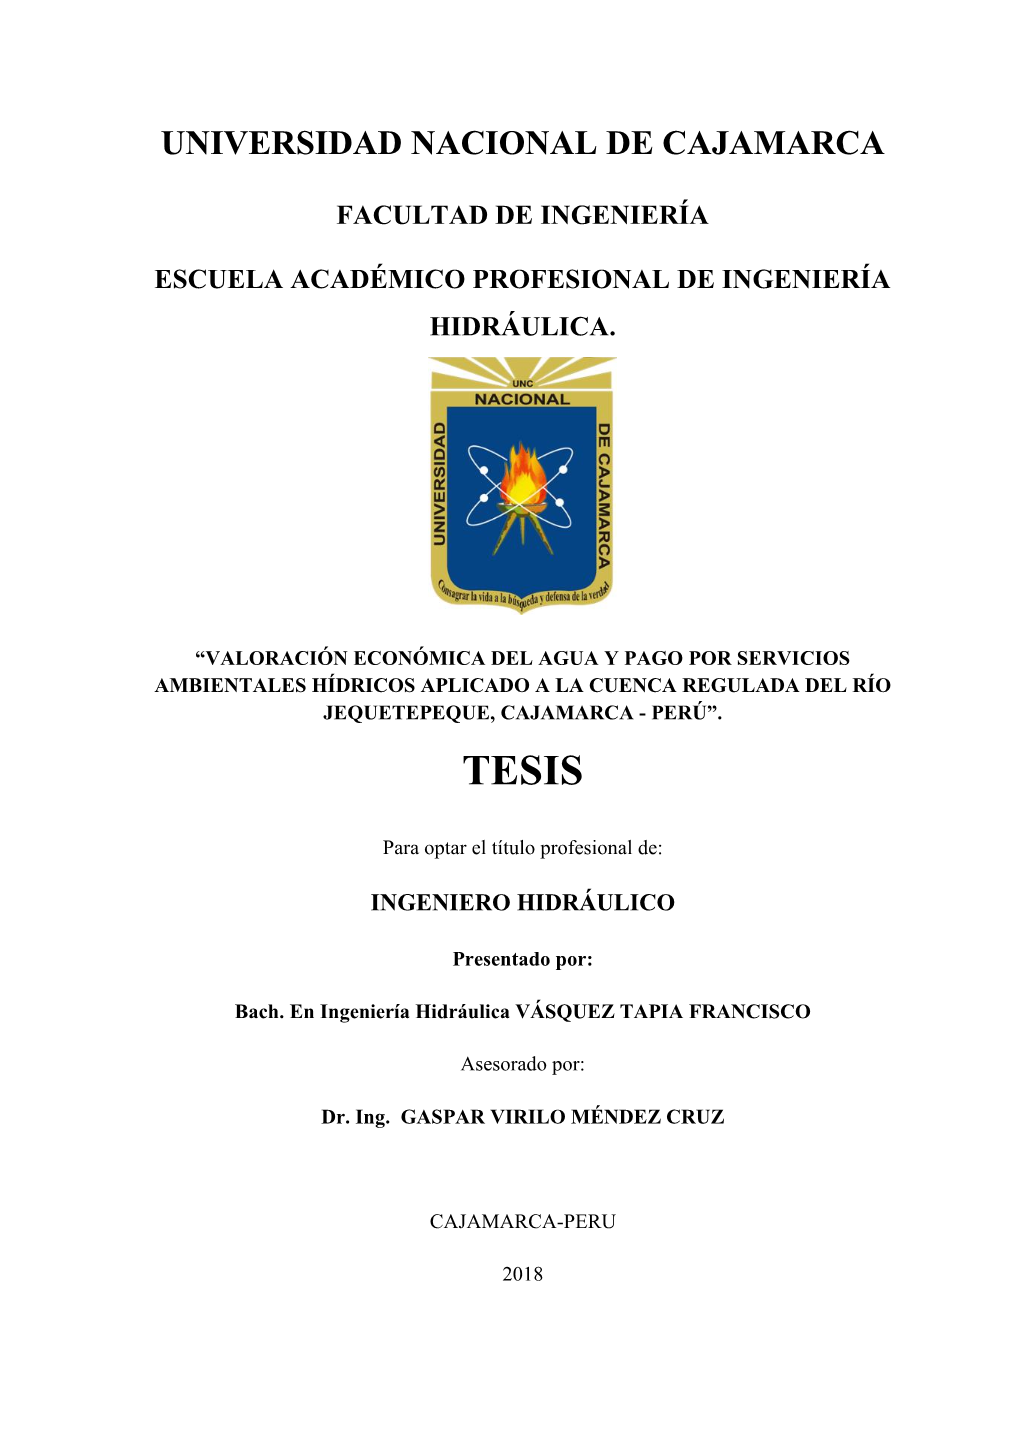 TESIS VALORACION ECONOMICA DEL AGUA FVT .Pdf (6.104Mb)